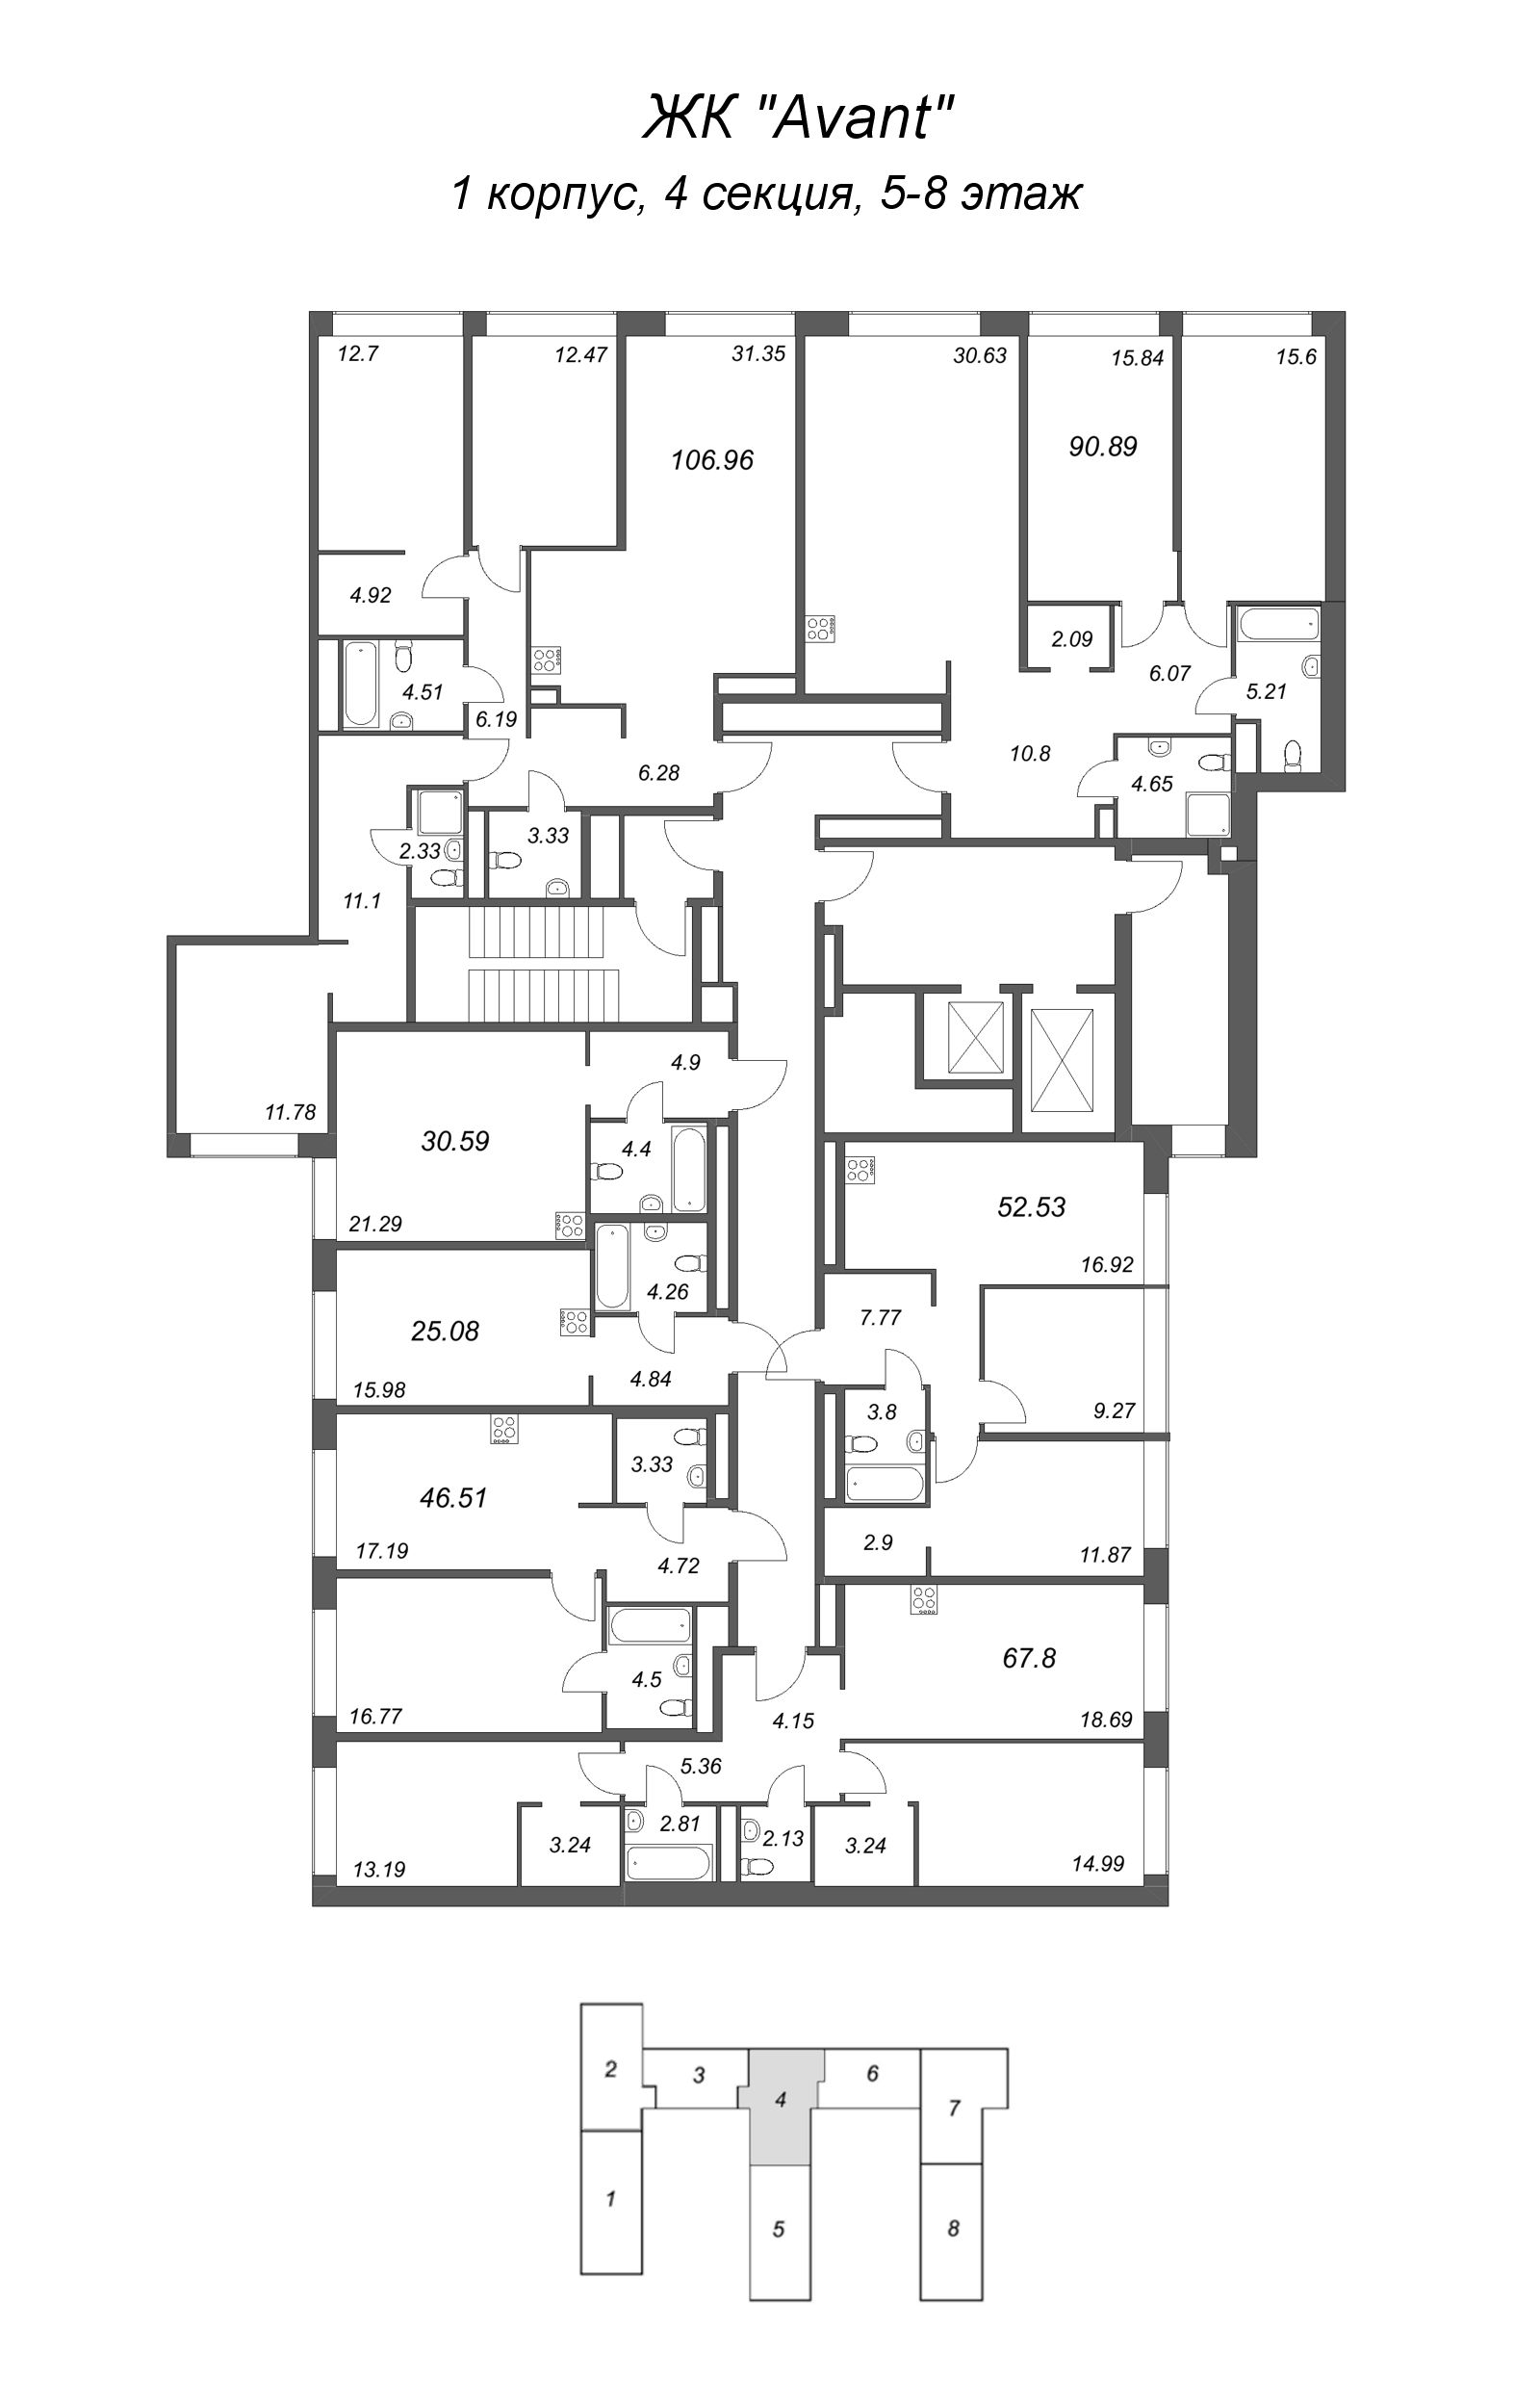 3-комнатная (Евро) квартира, 52.53 м² - планировка этажа